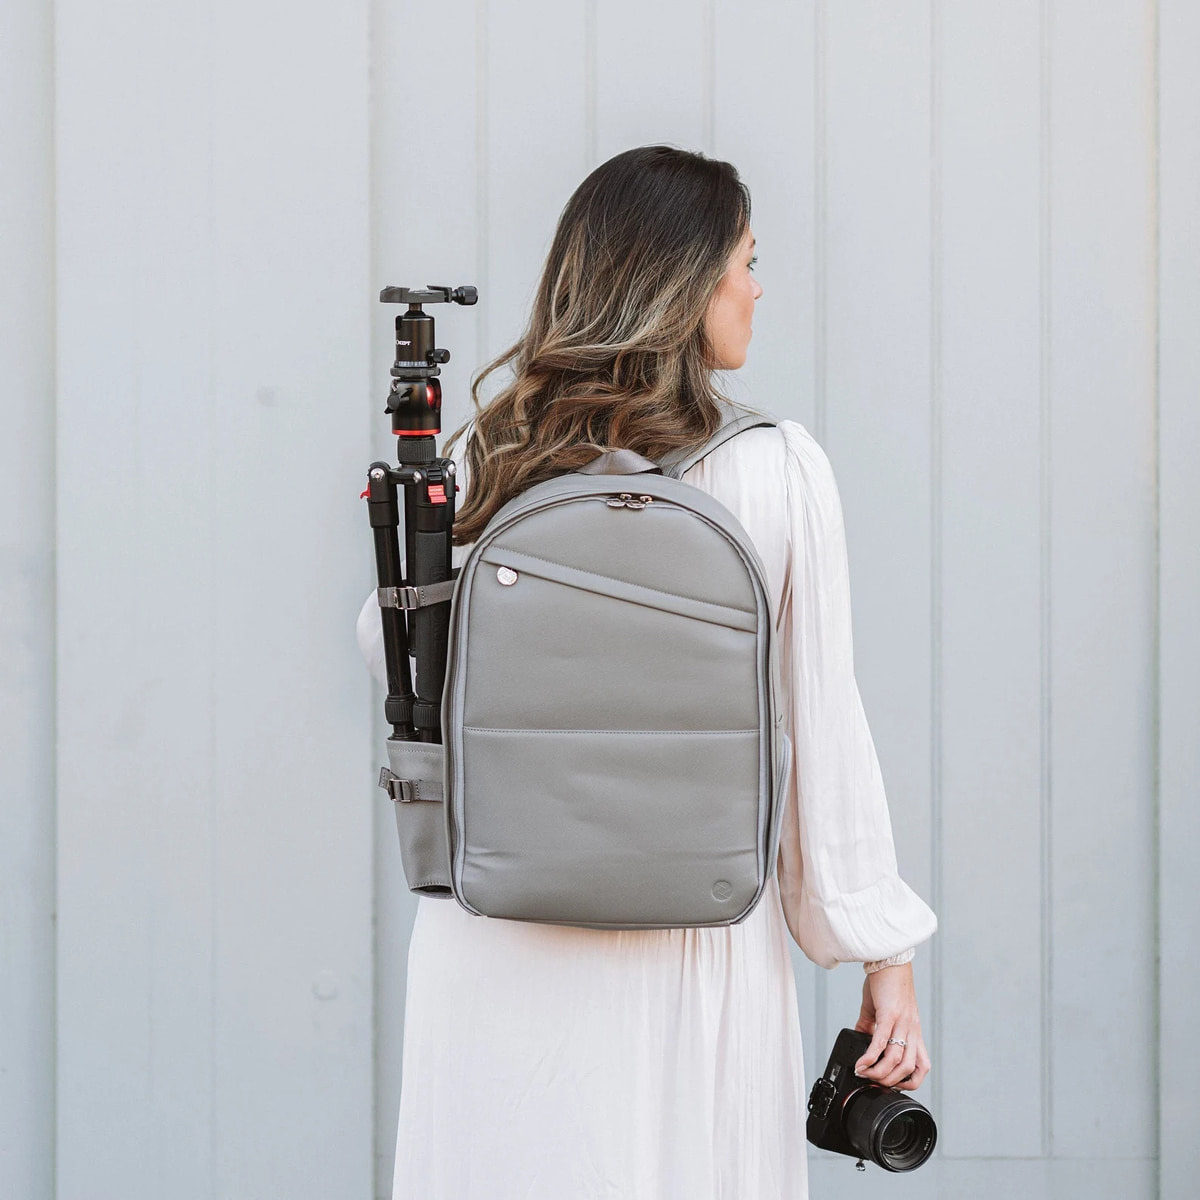 Best camera backpack for women